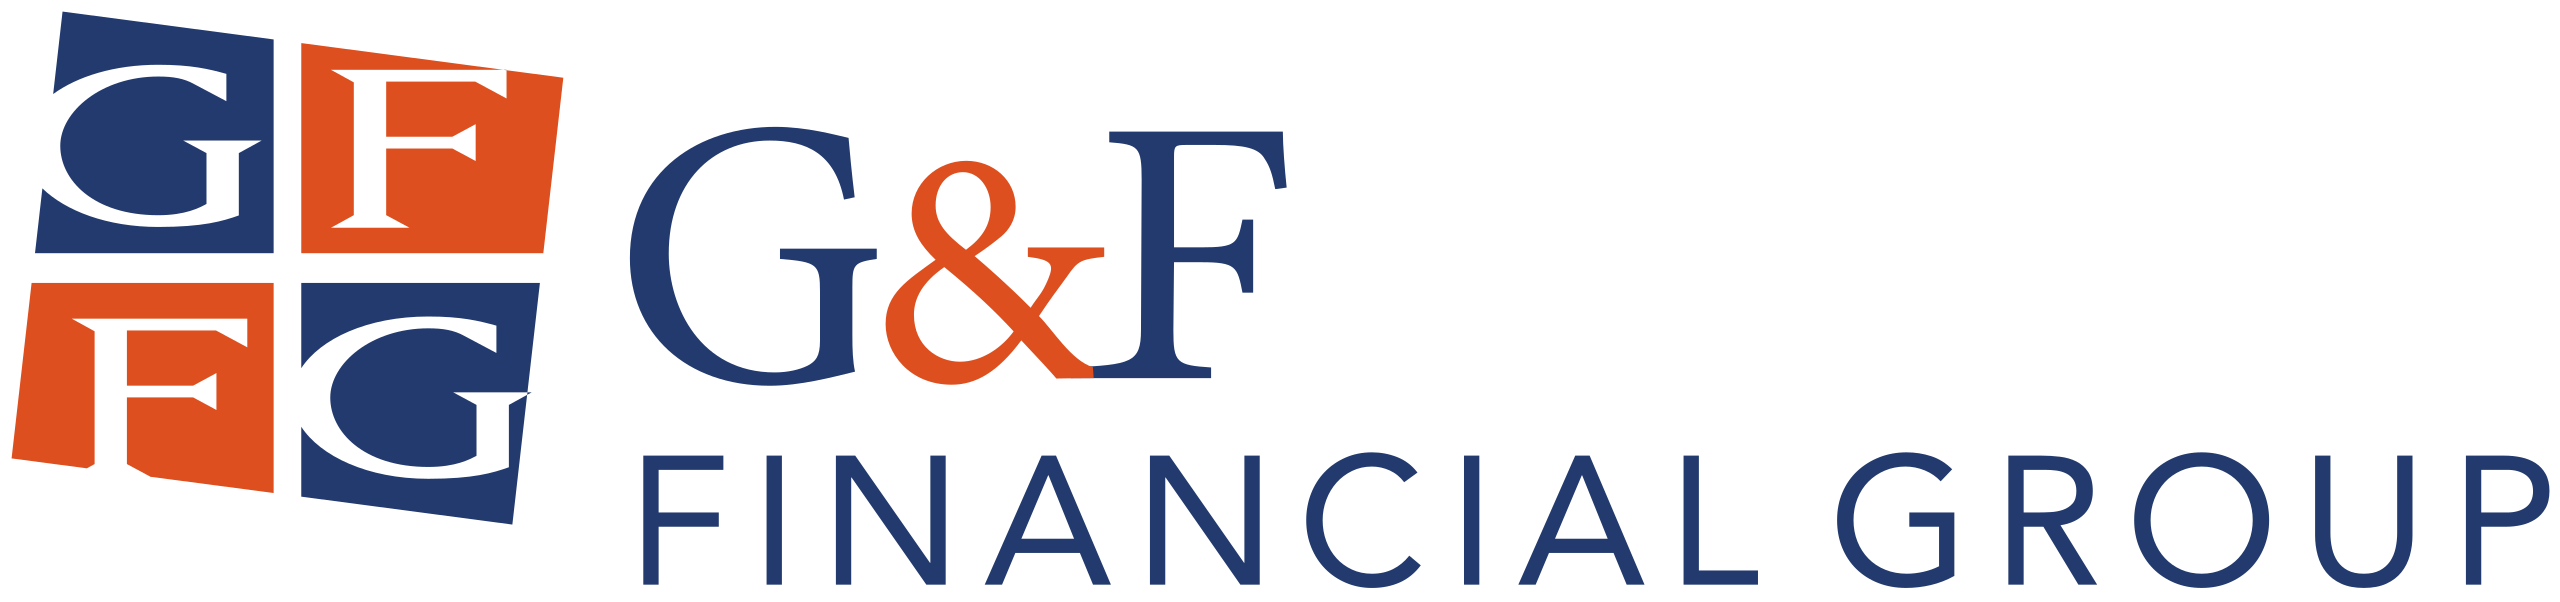 GF Financial Group logo svg